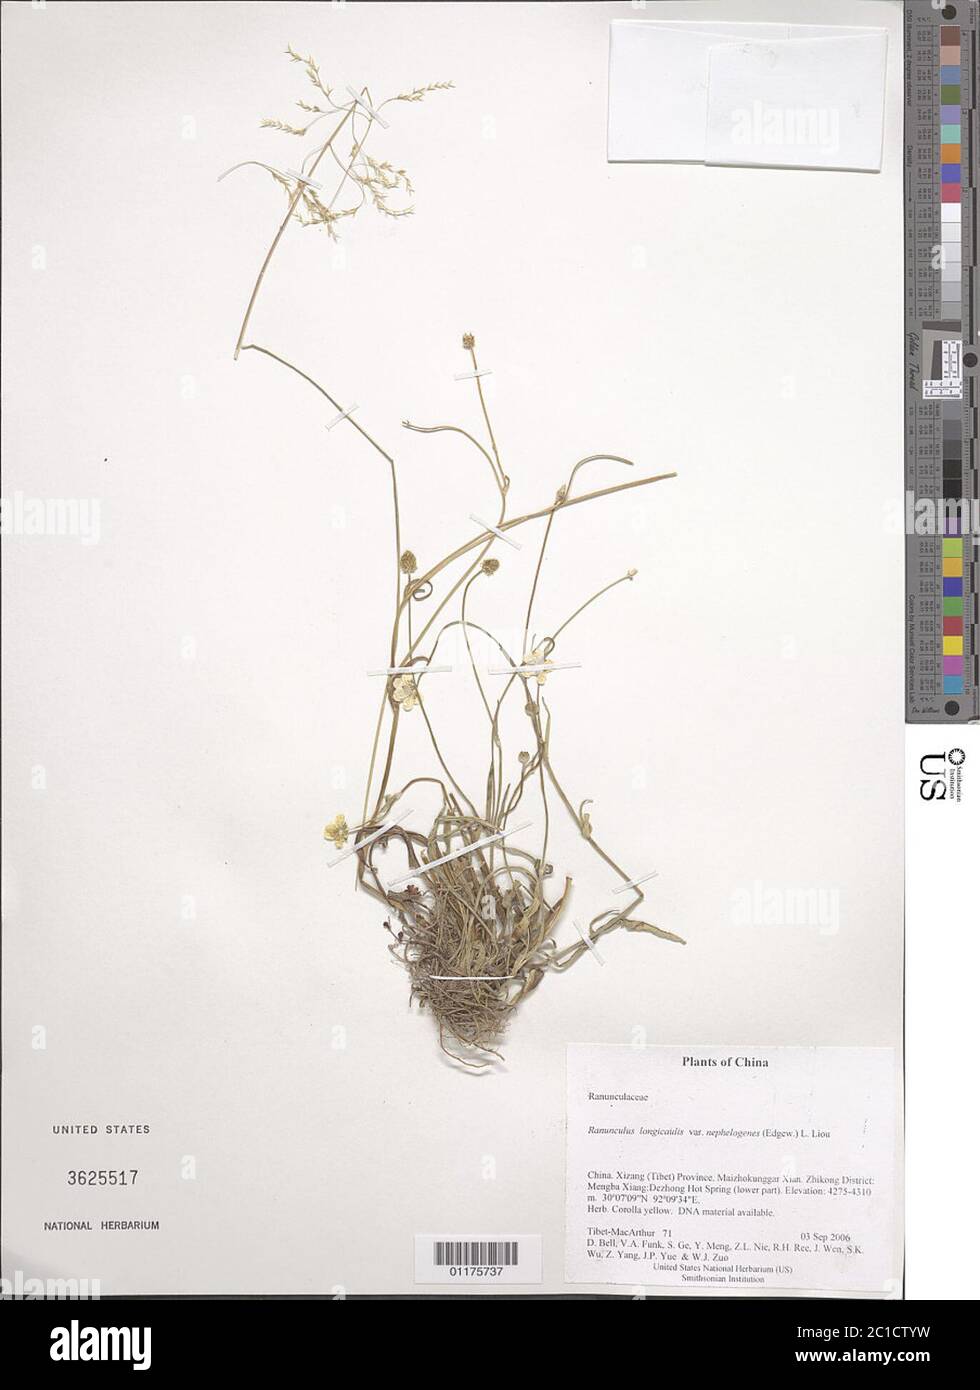 Ranunculus longicaulis var nephelogenes Edgew L Liu Ranunculus longicaulis var nephelogenes Edgew L Liu. Stock Photo